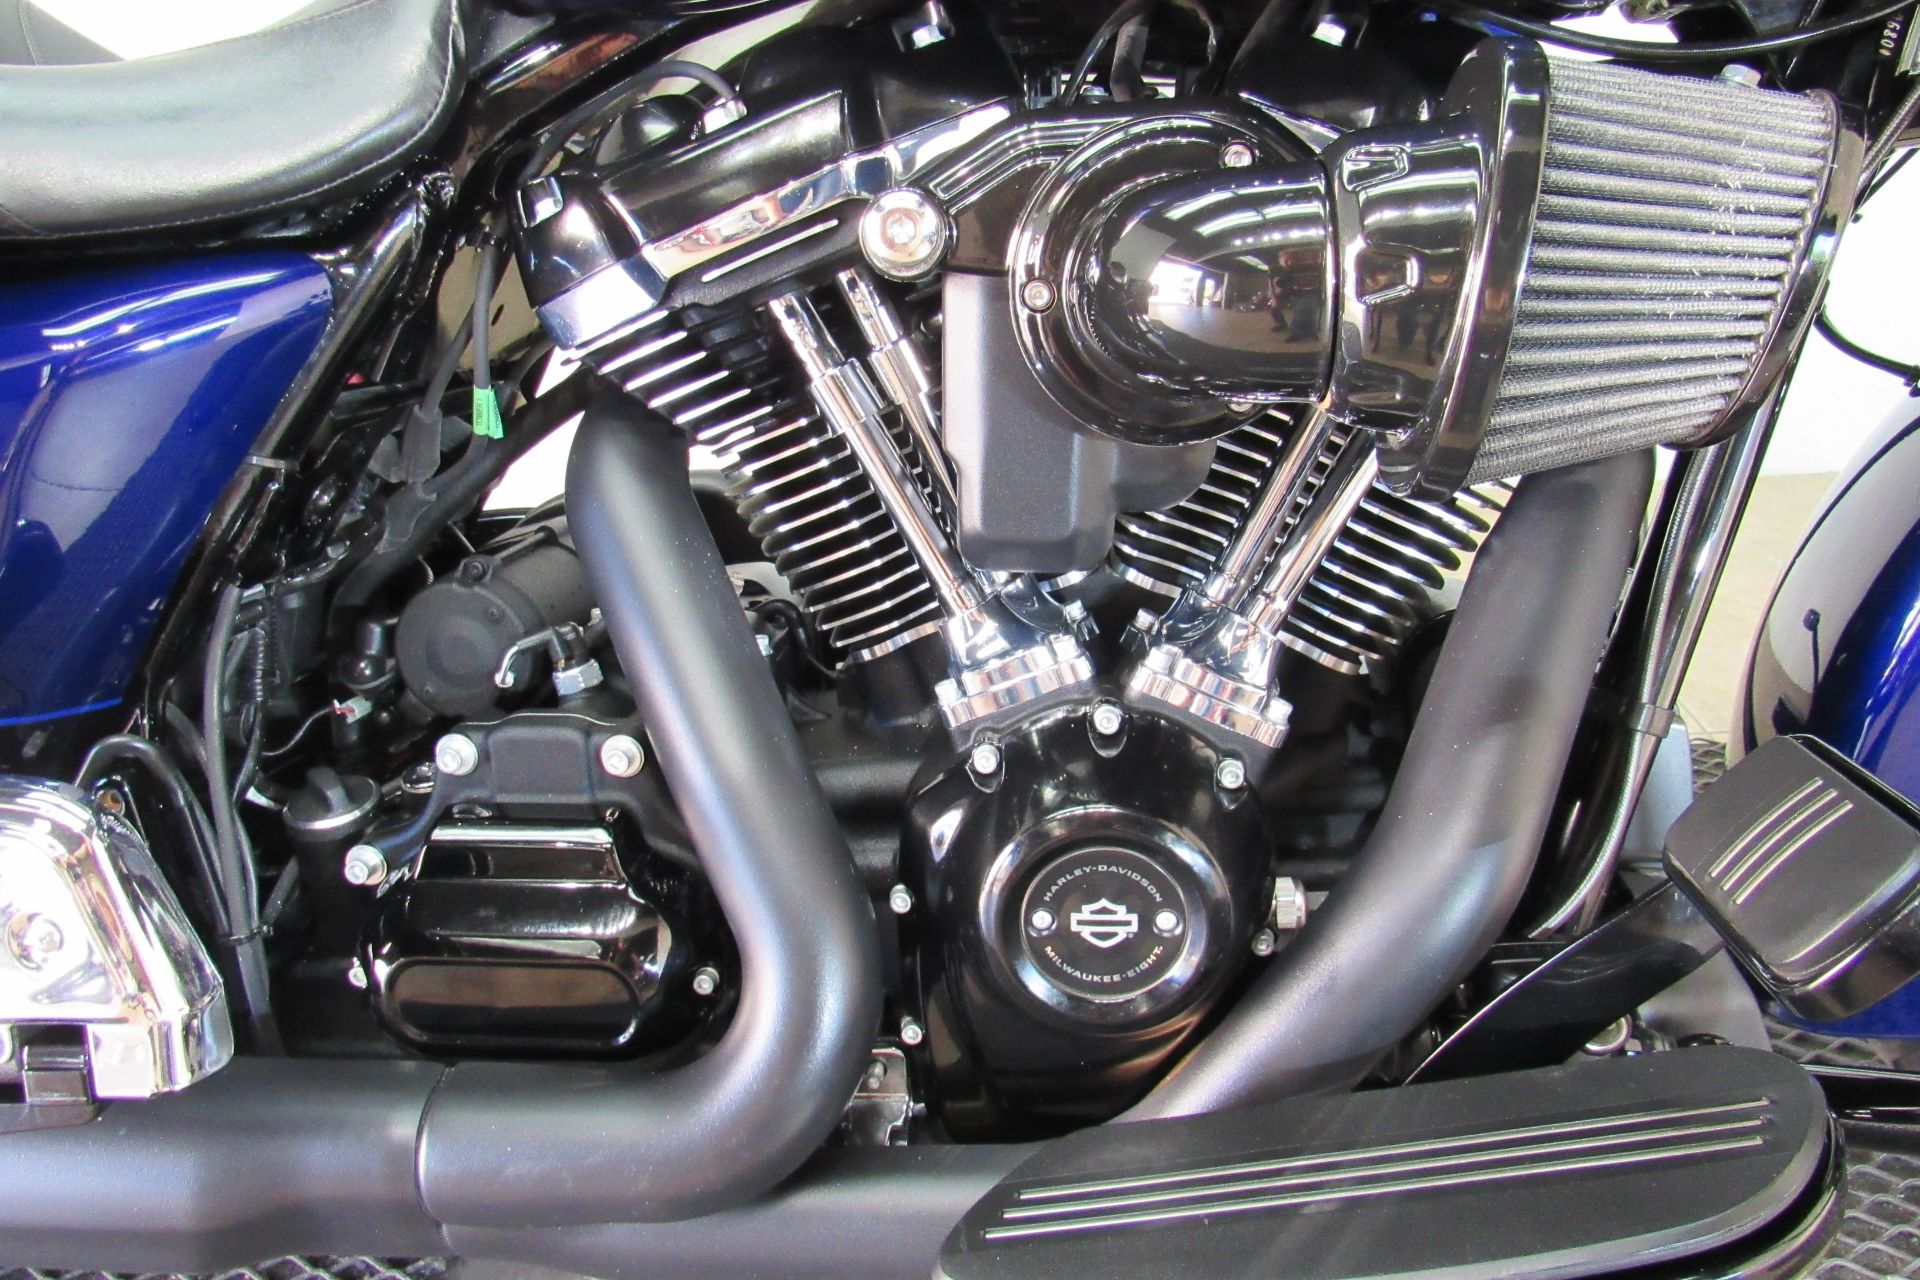 2020 Harley-Davidson Road Glide® Special in Temecula, California - Photo 11